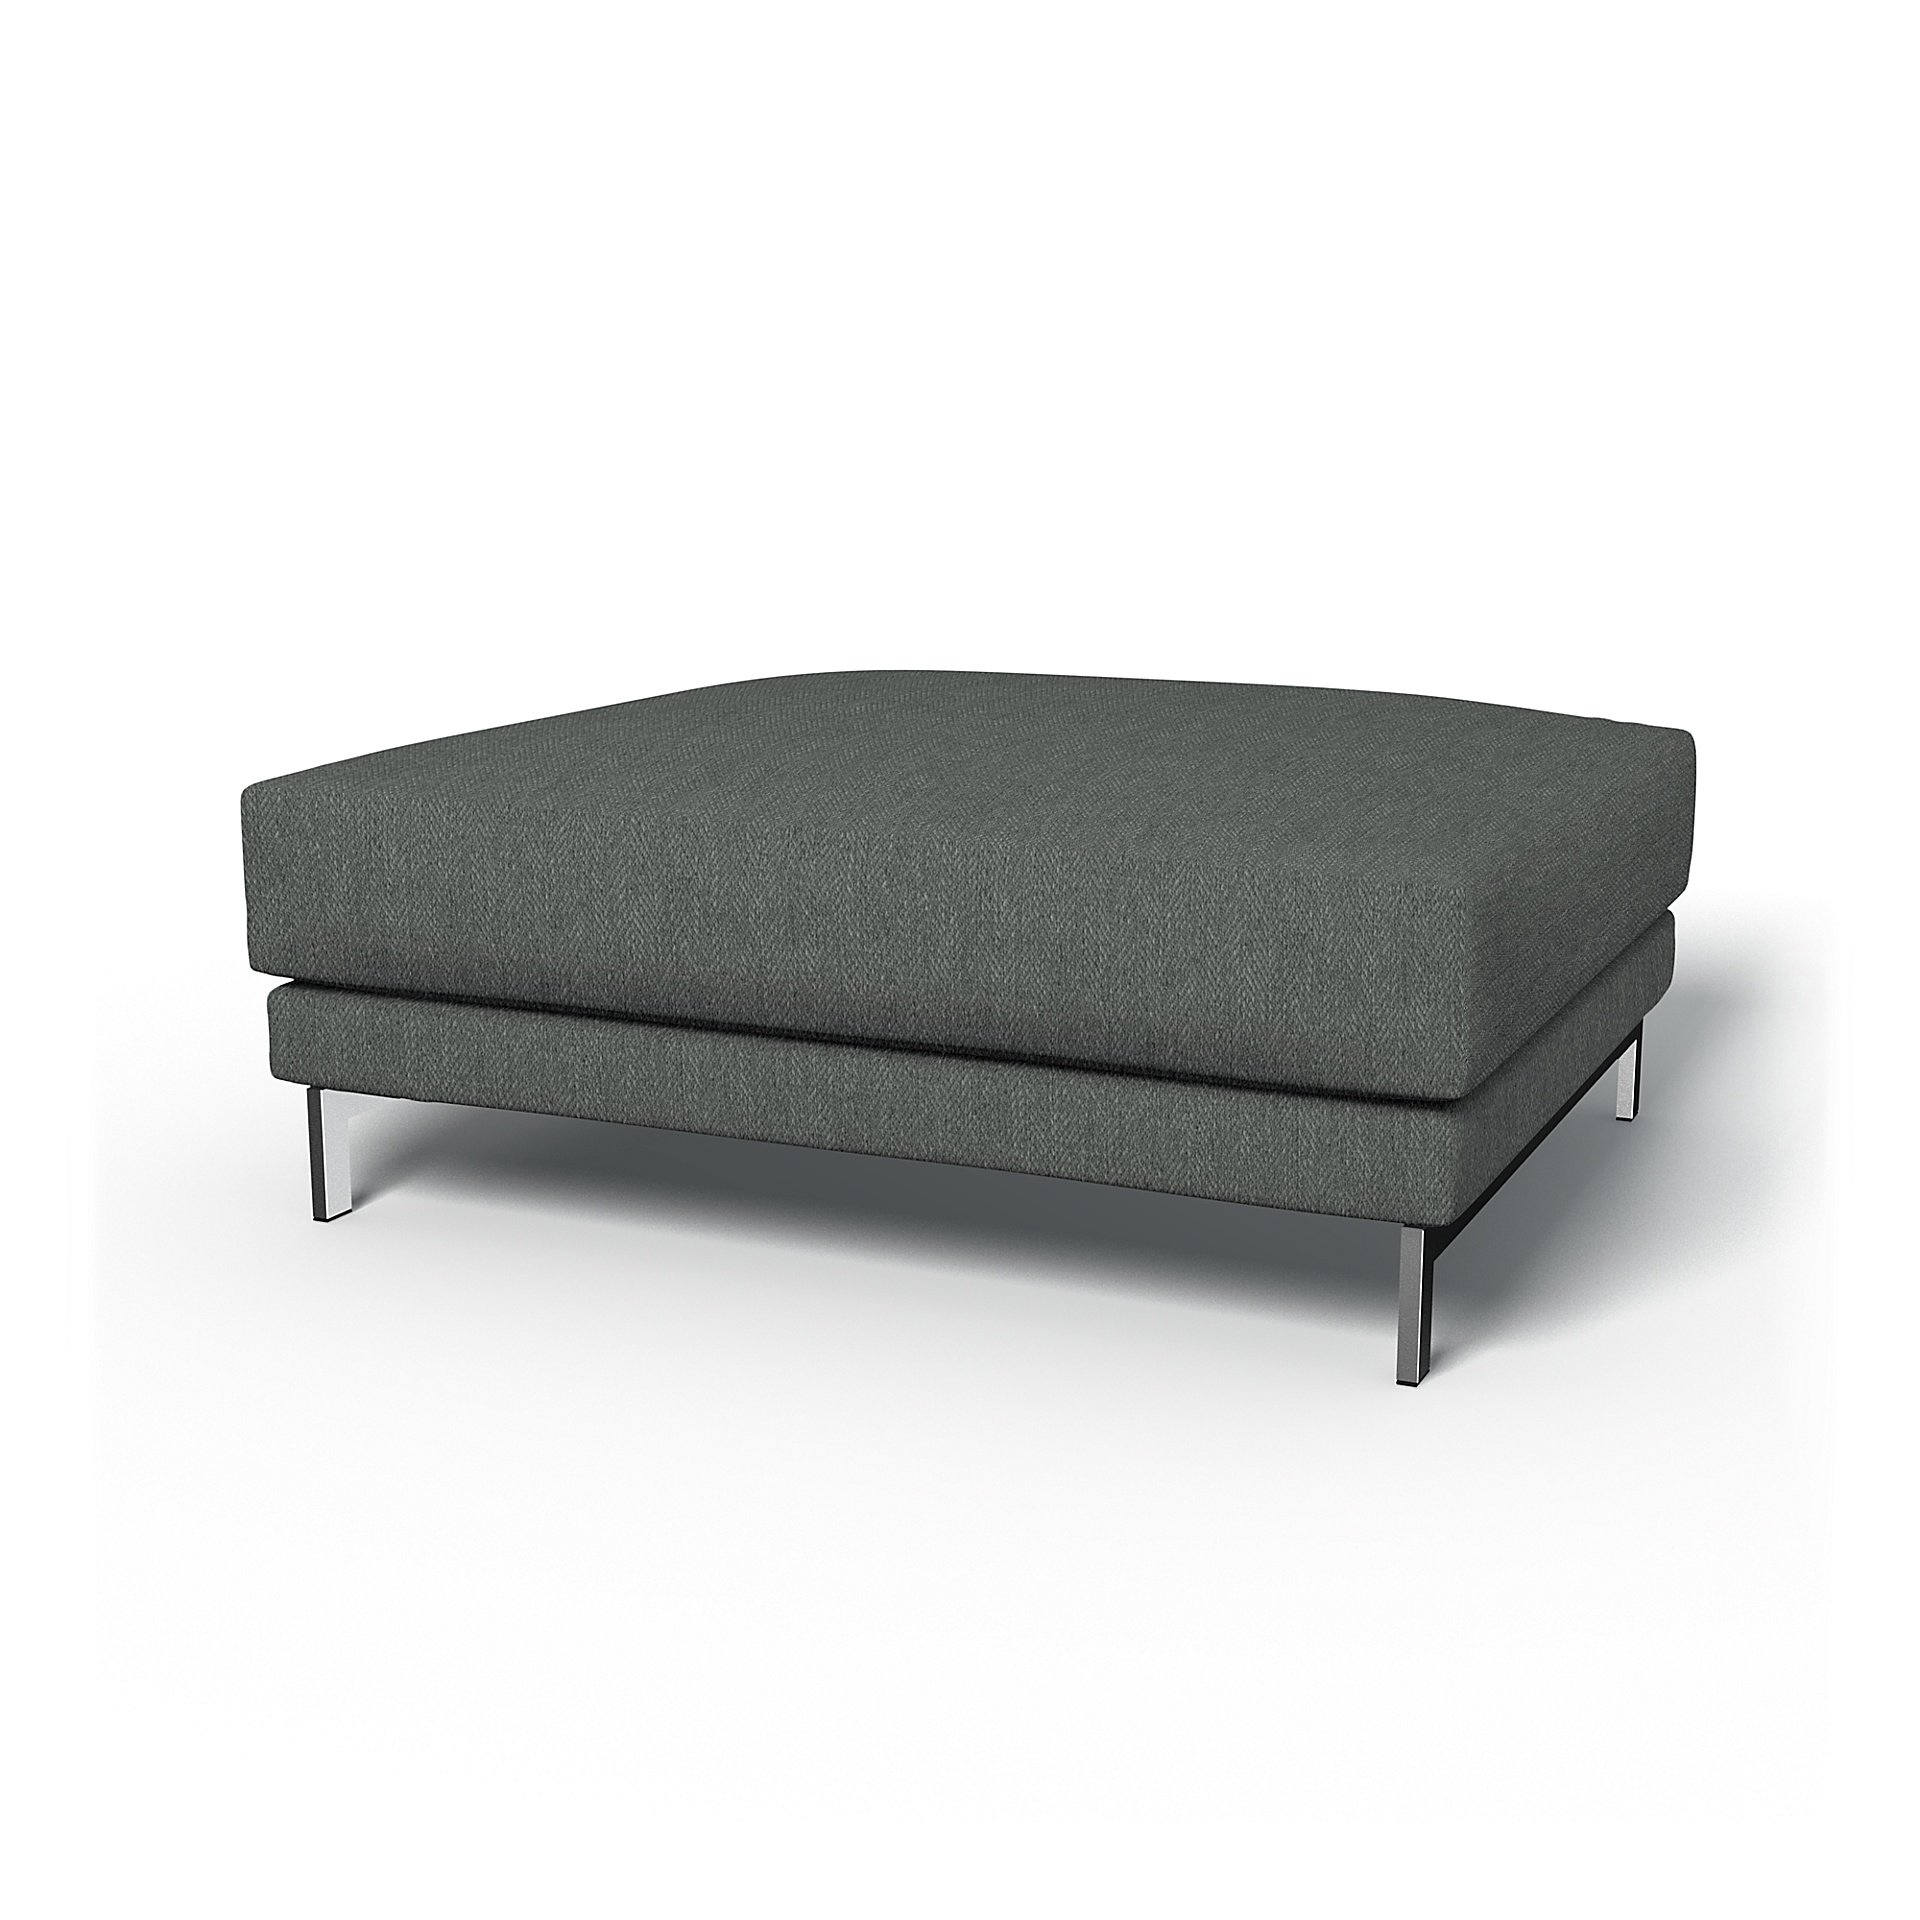 IKEA - Nockeby Footstool Cover, Laurel, Boucle & Texture - Bemz